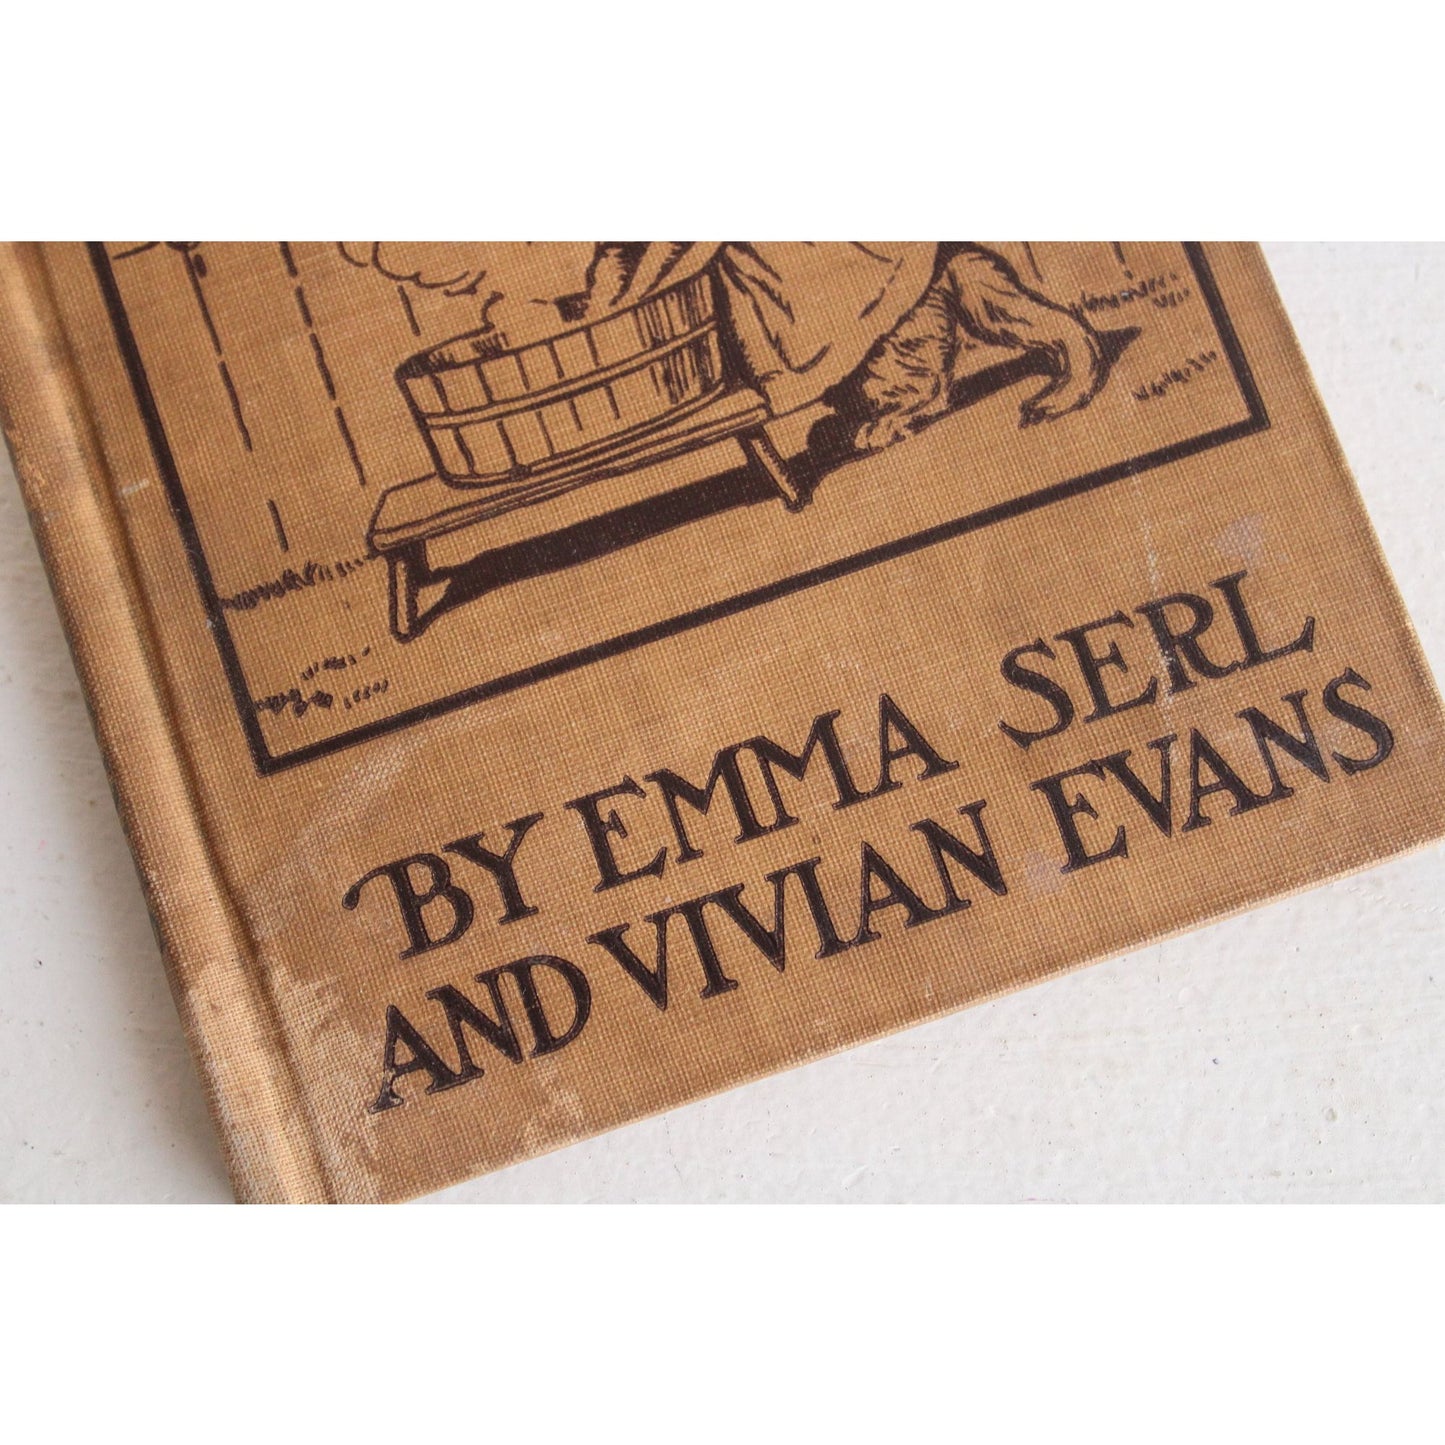 Vintage 1910s Childrens Book, Emma Serk and Vivian Evans, "Work-A-Day Doings"